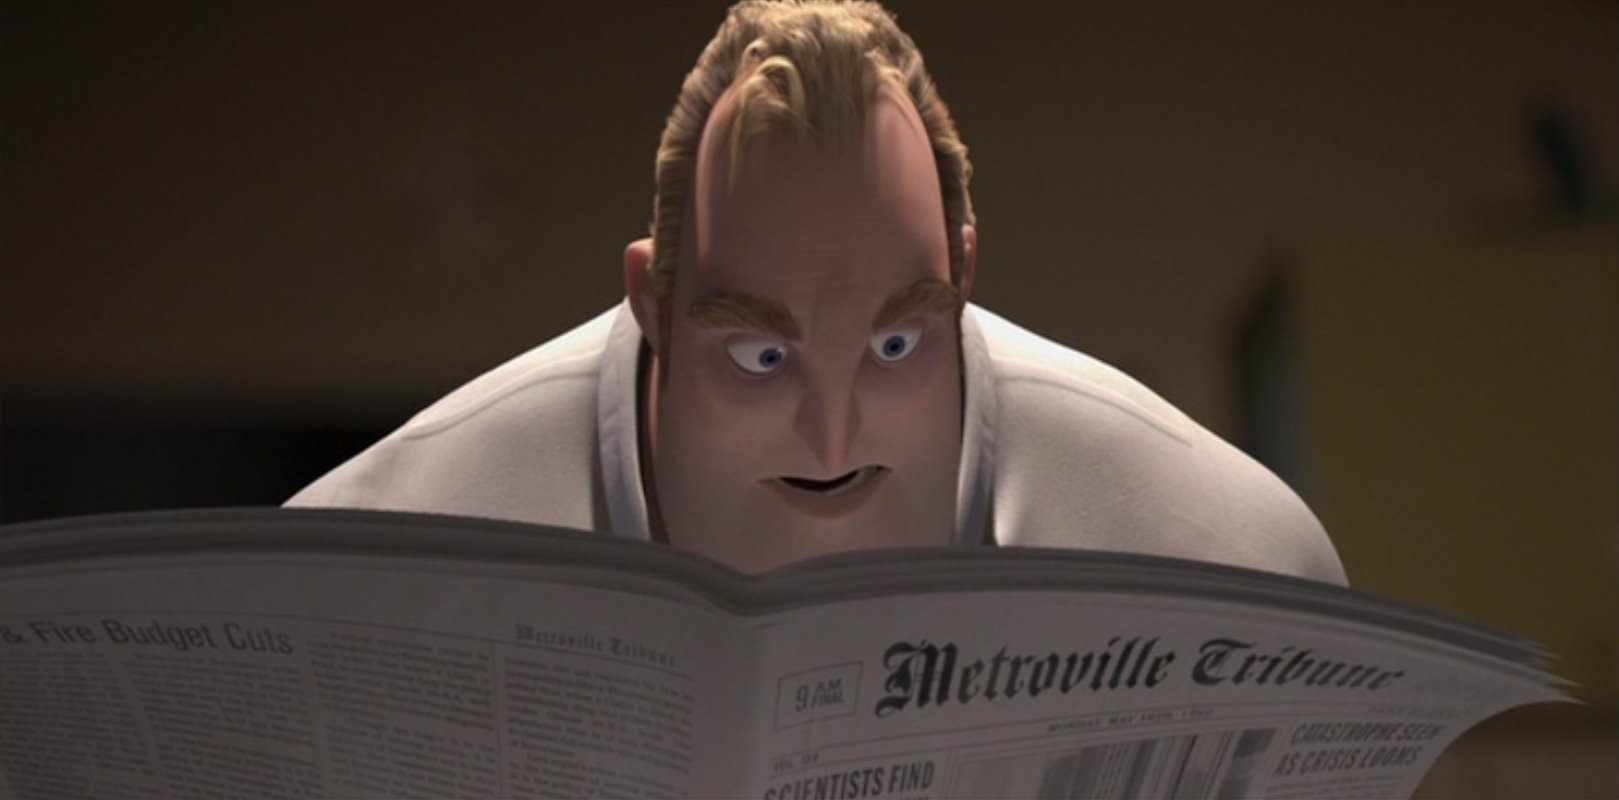 Movie, The Incredibles(美國, 2004) / 超人特攻隊(台) / 超人总动员(中) / 超人特工隊(港), 電影劇照